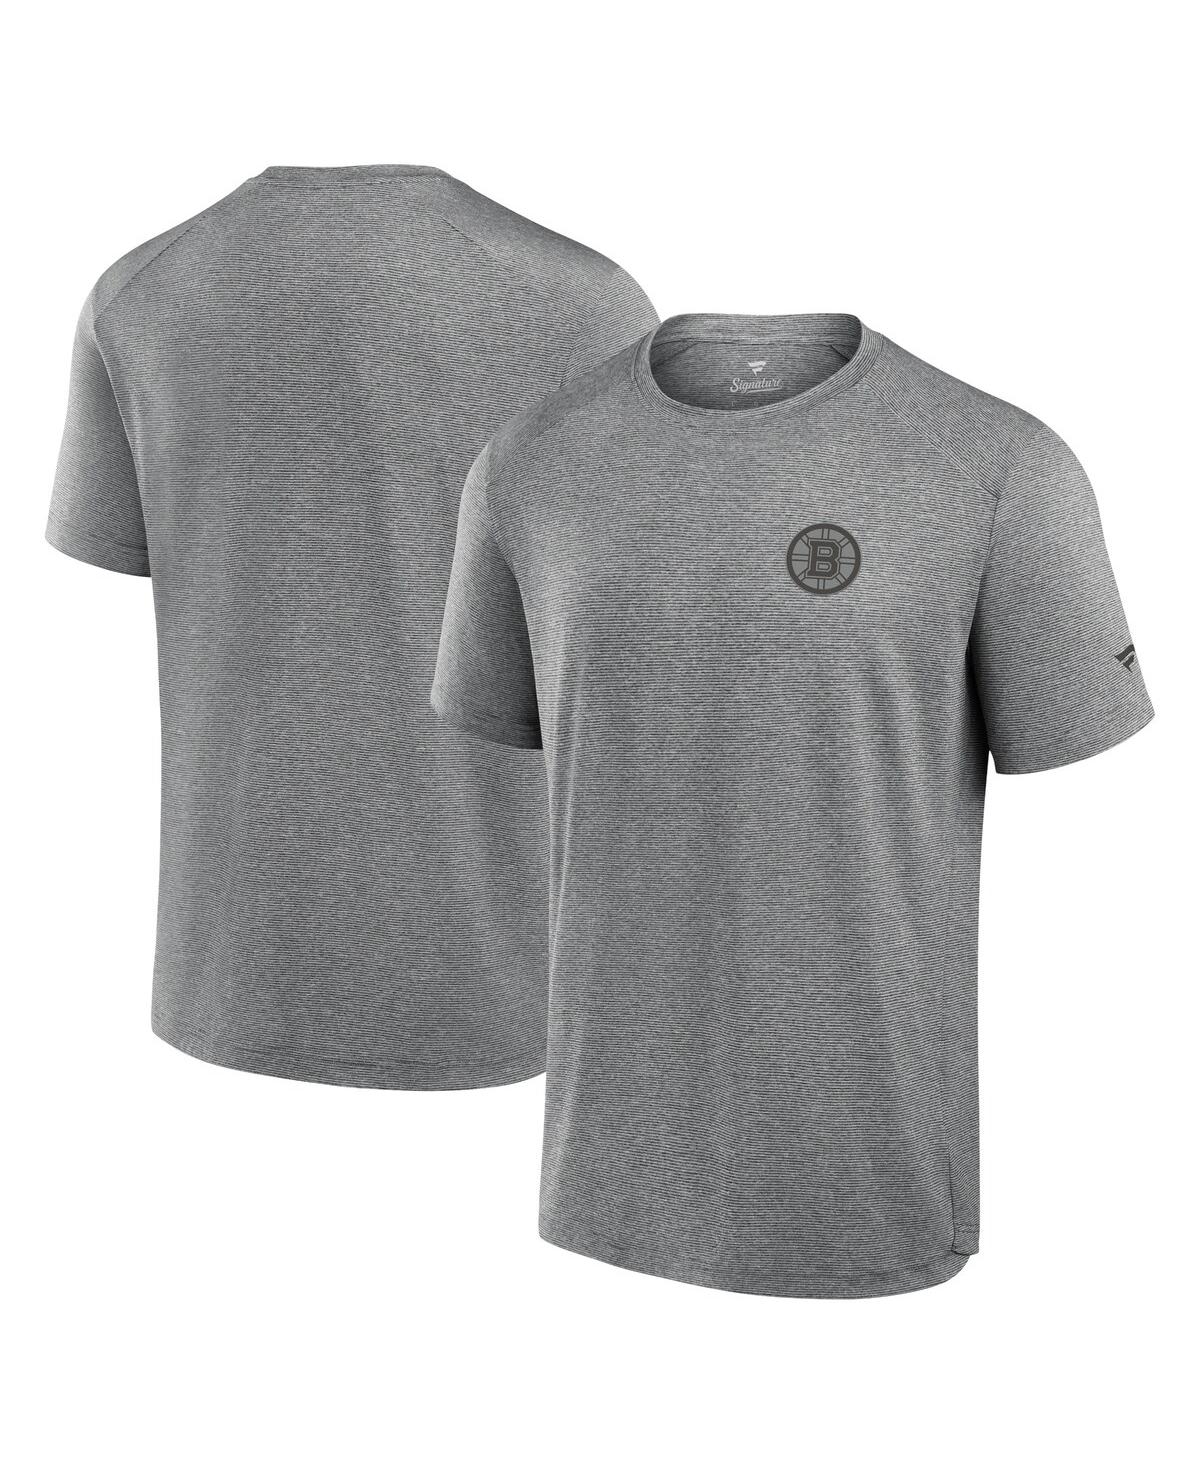 Fanatics Signature Men's Gray Boston Bruins Front Office Tech T-shirt